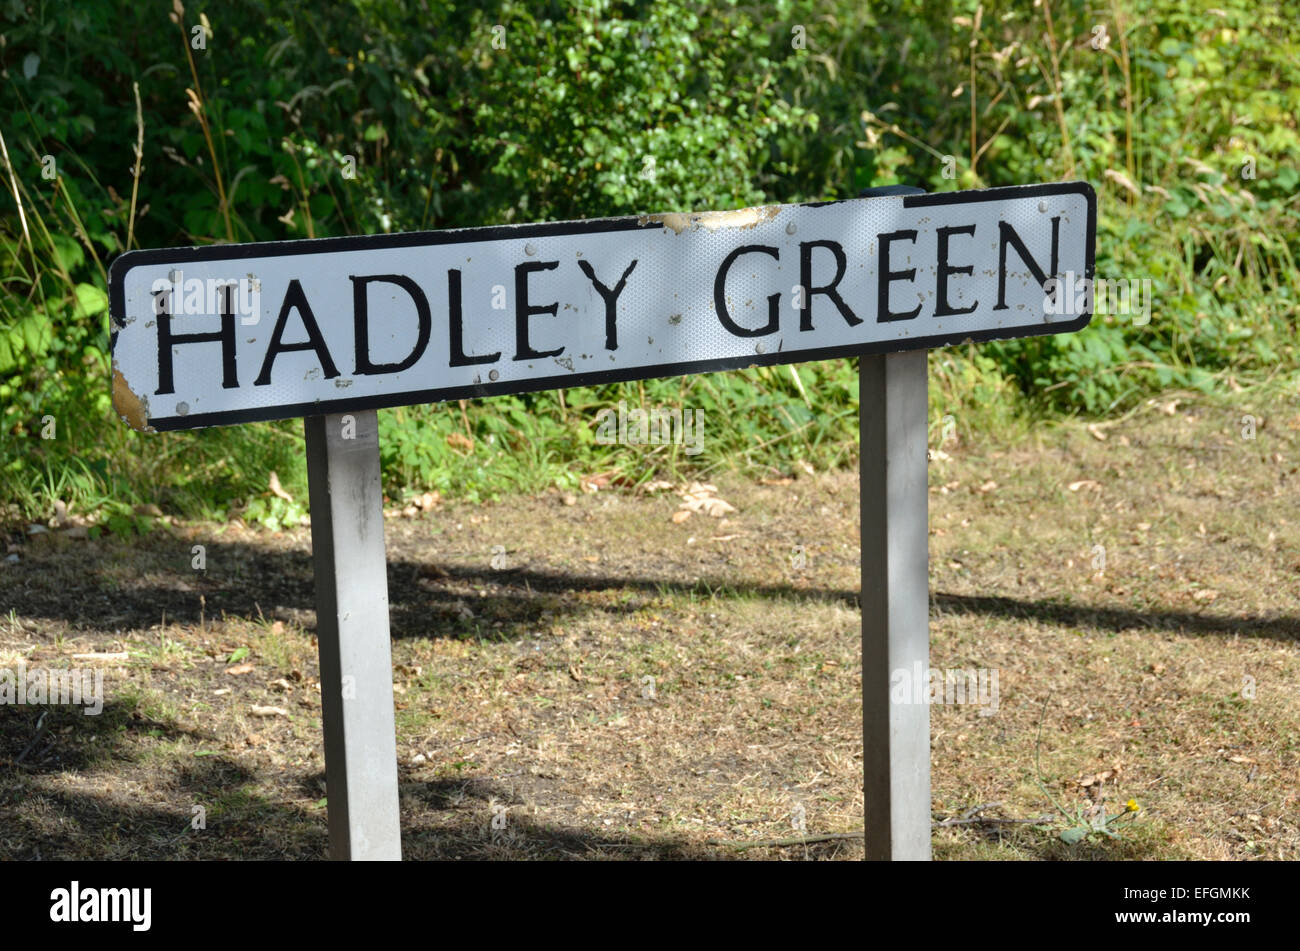 Hadley Green street sign, High Barnet, London, UK. Stock Photo